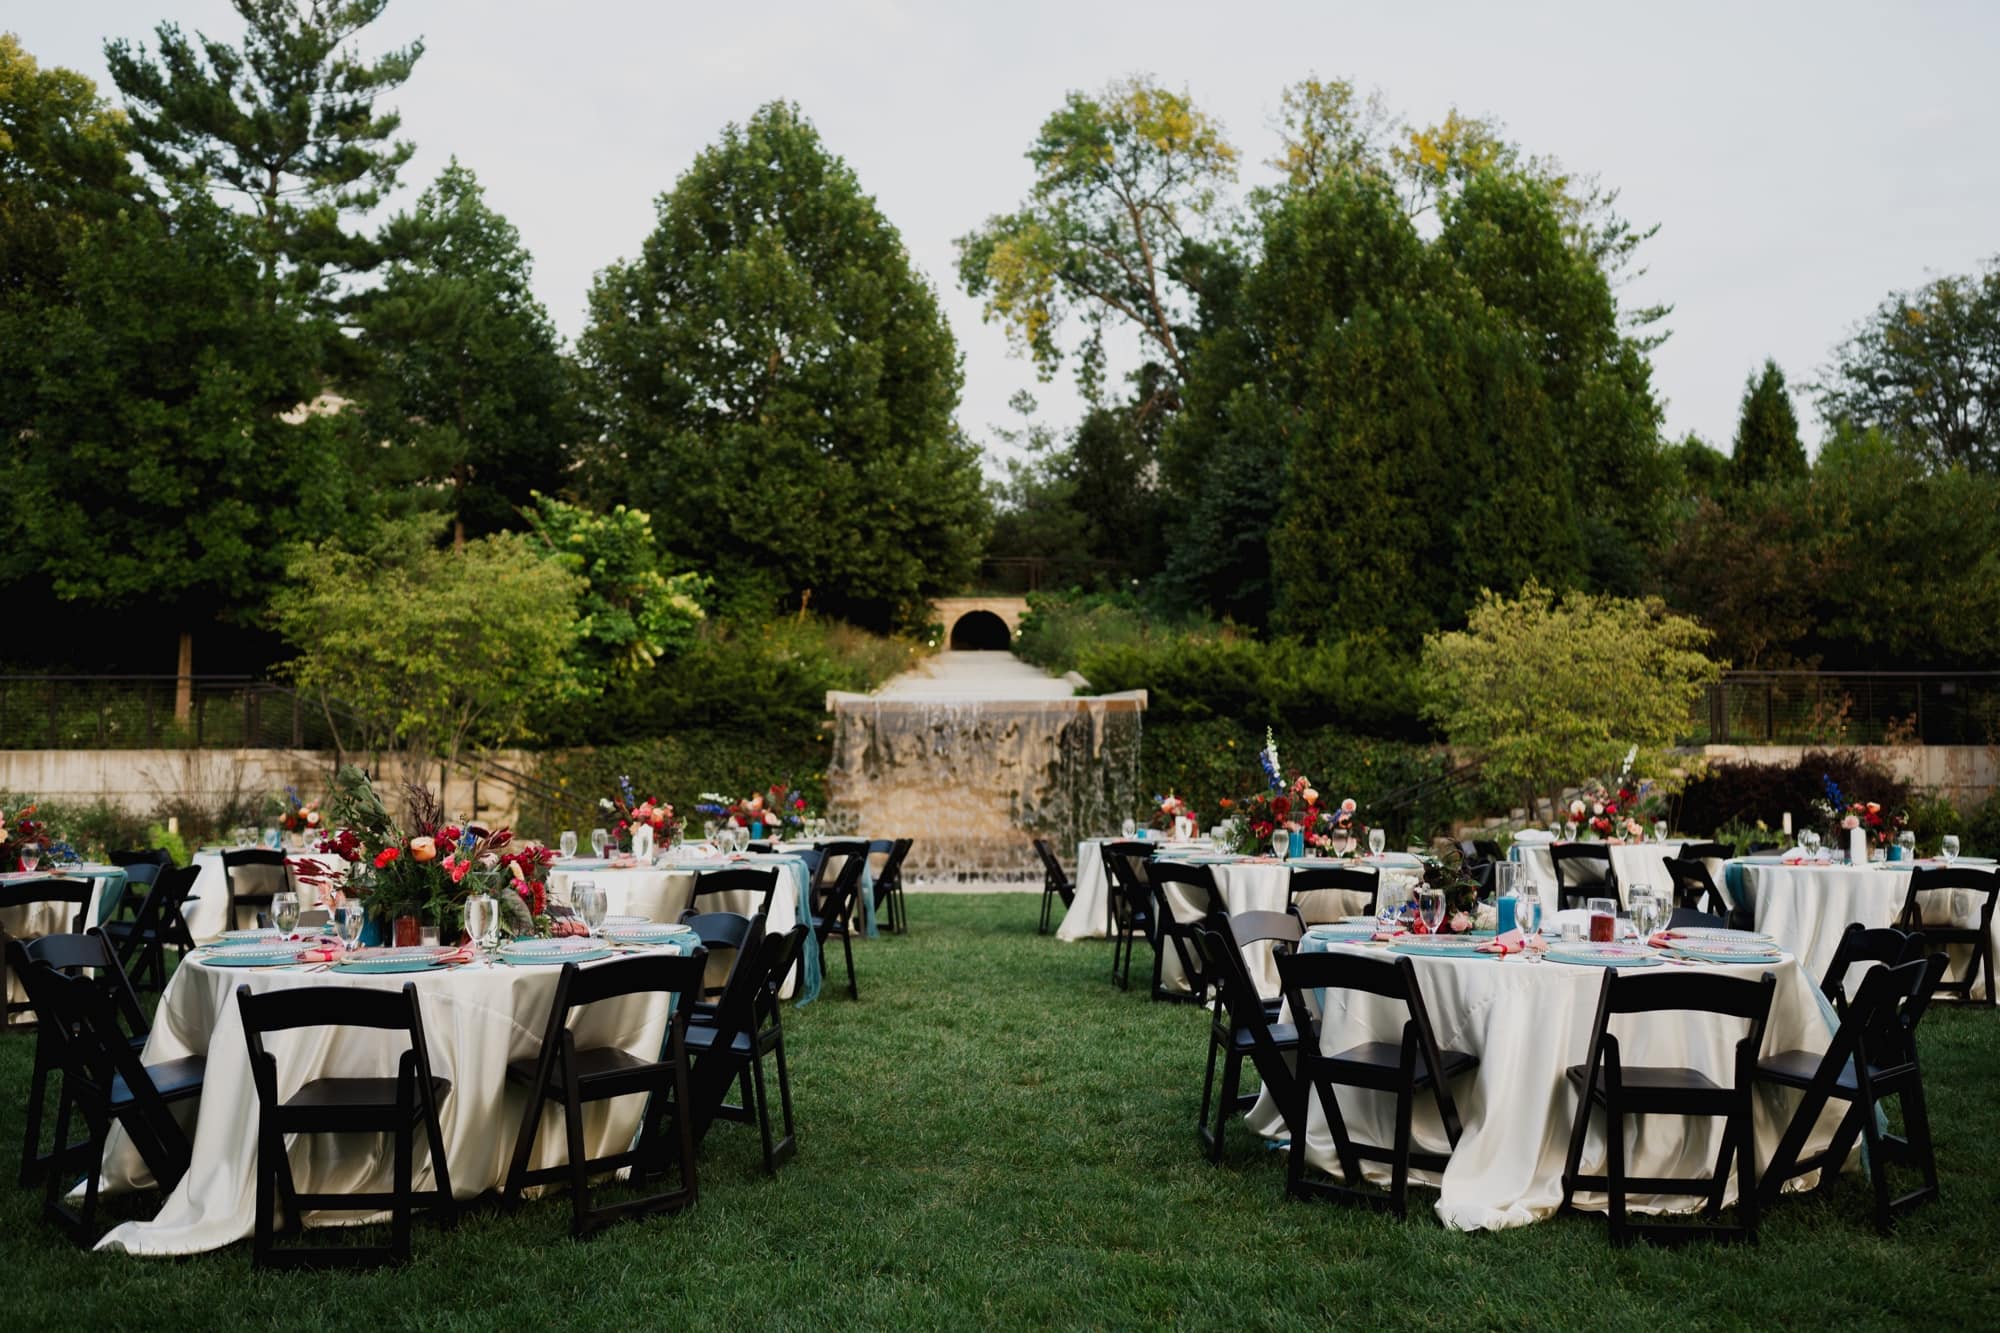 Outdoor set up for greater Des Moines botanical Garden wedding